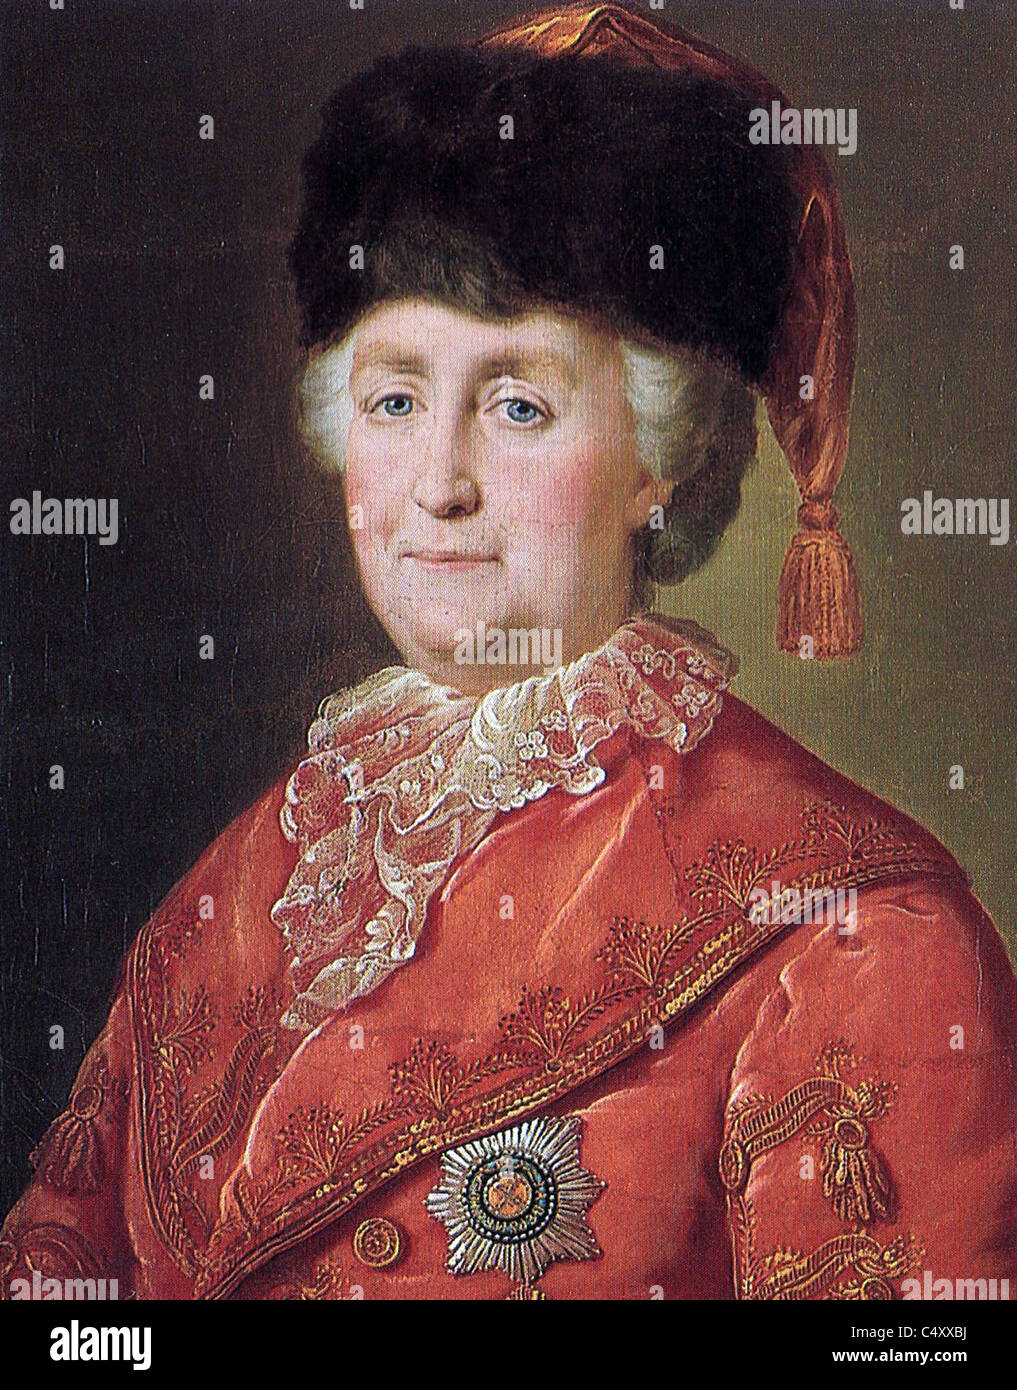 L'imperatrice Caterina II di Russia, Caterina la Grande. Foto Stock